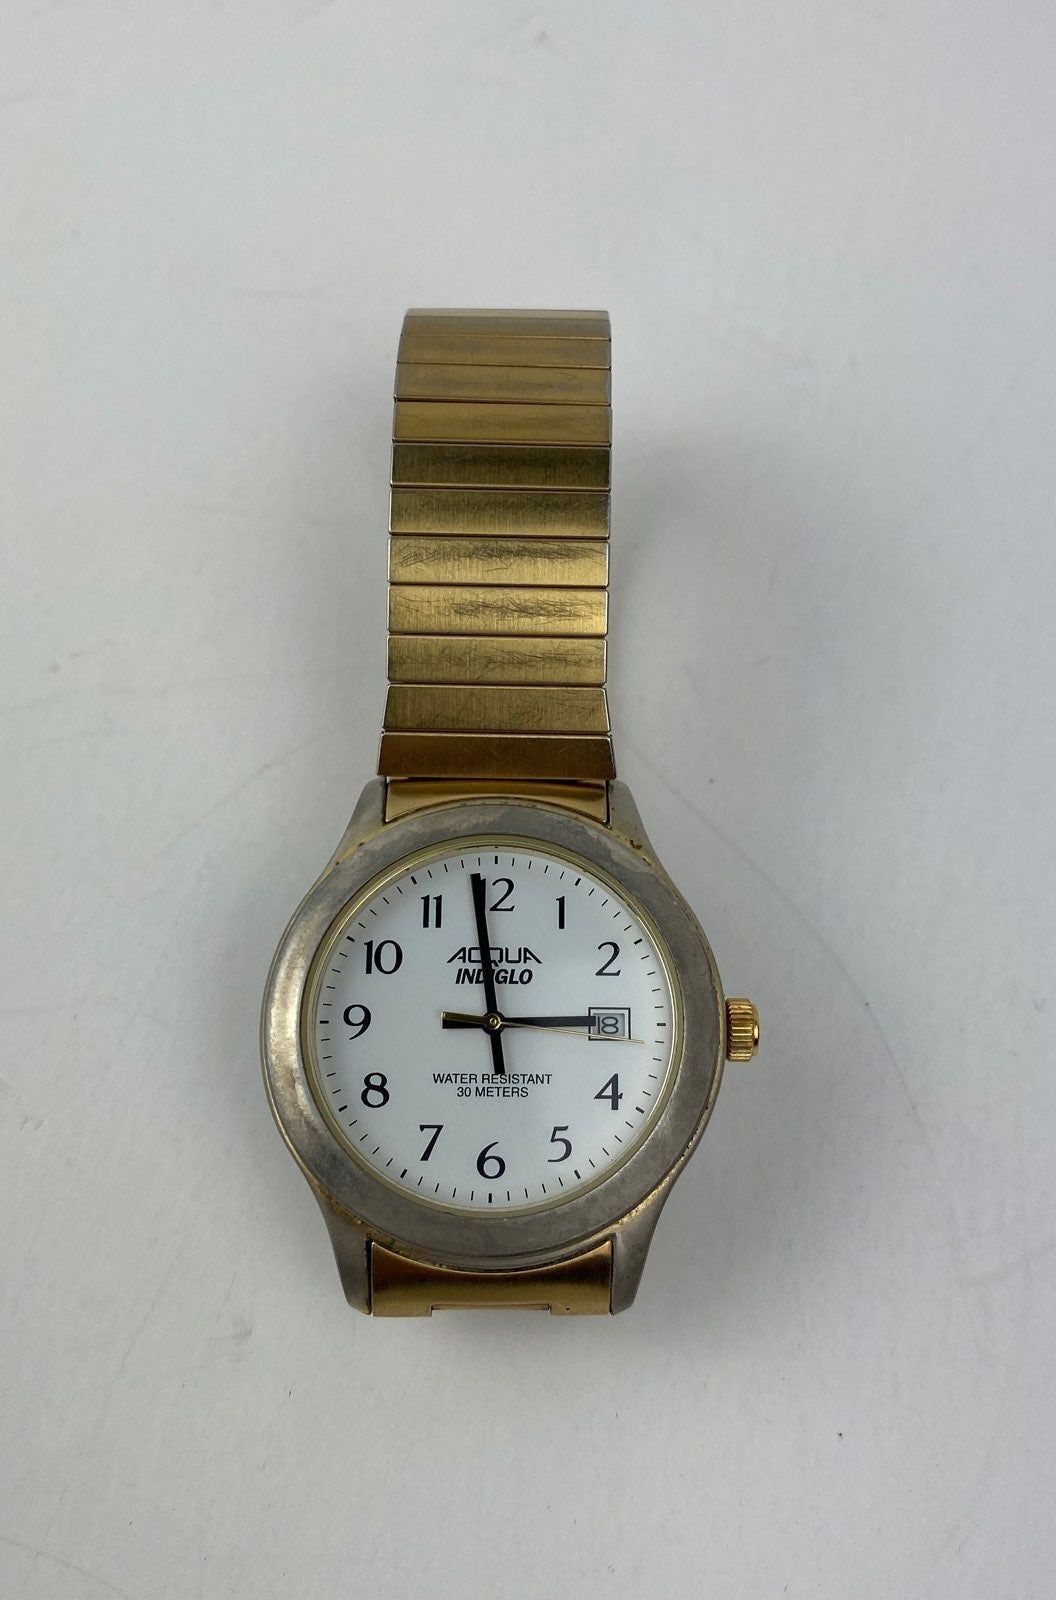 Aqua indiglo vintage wrist watch water resistant 30 ft  - $14.97